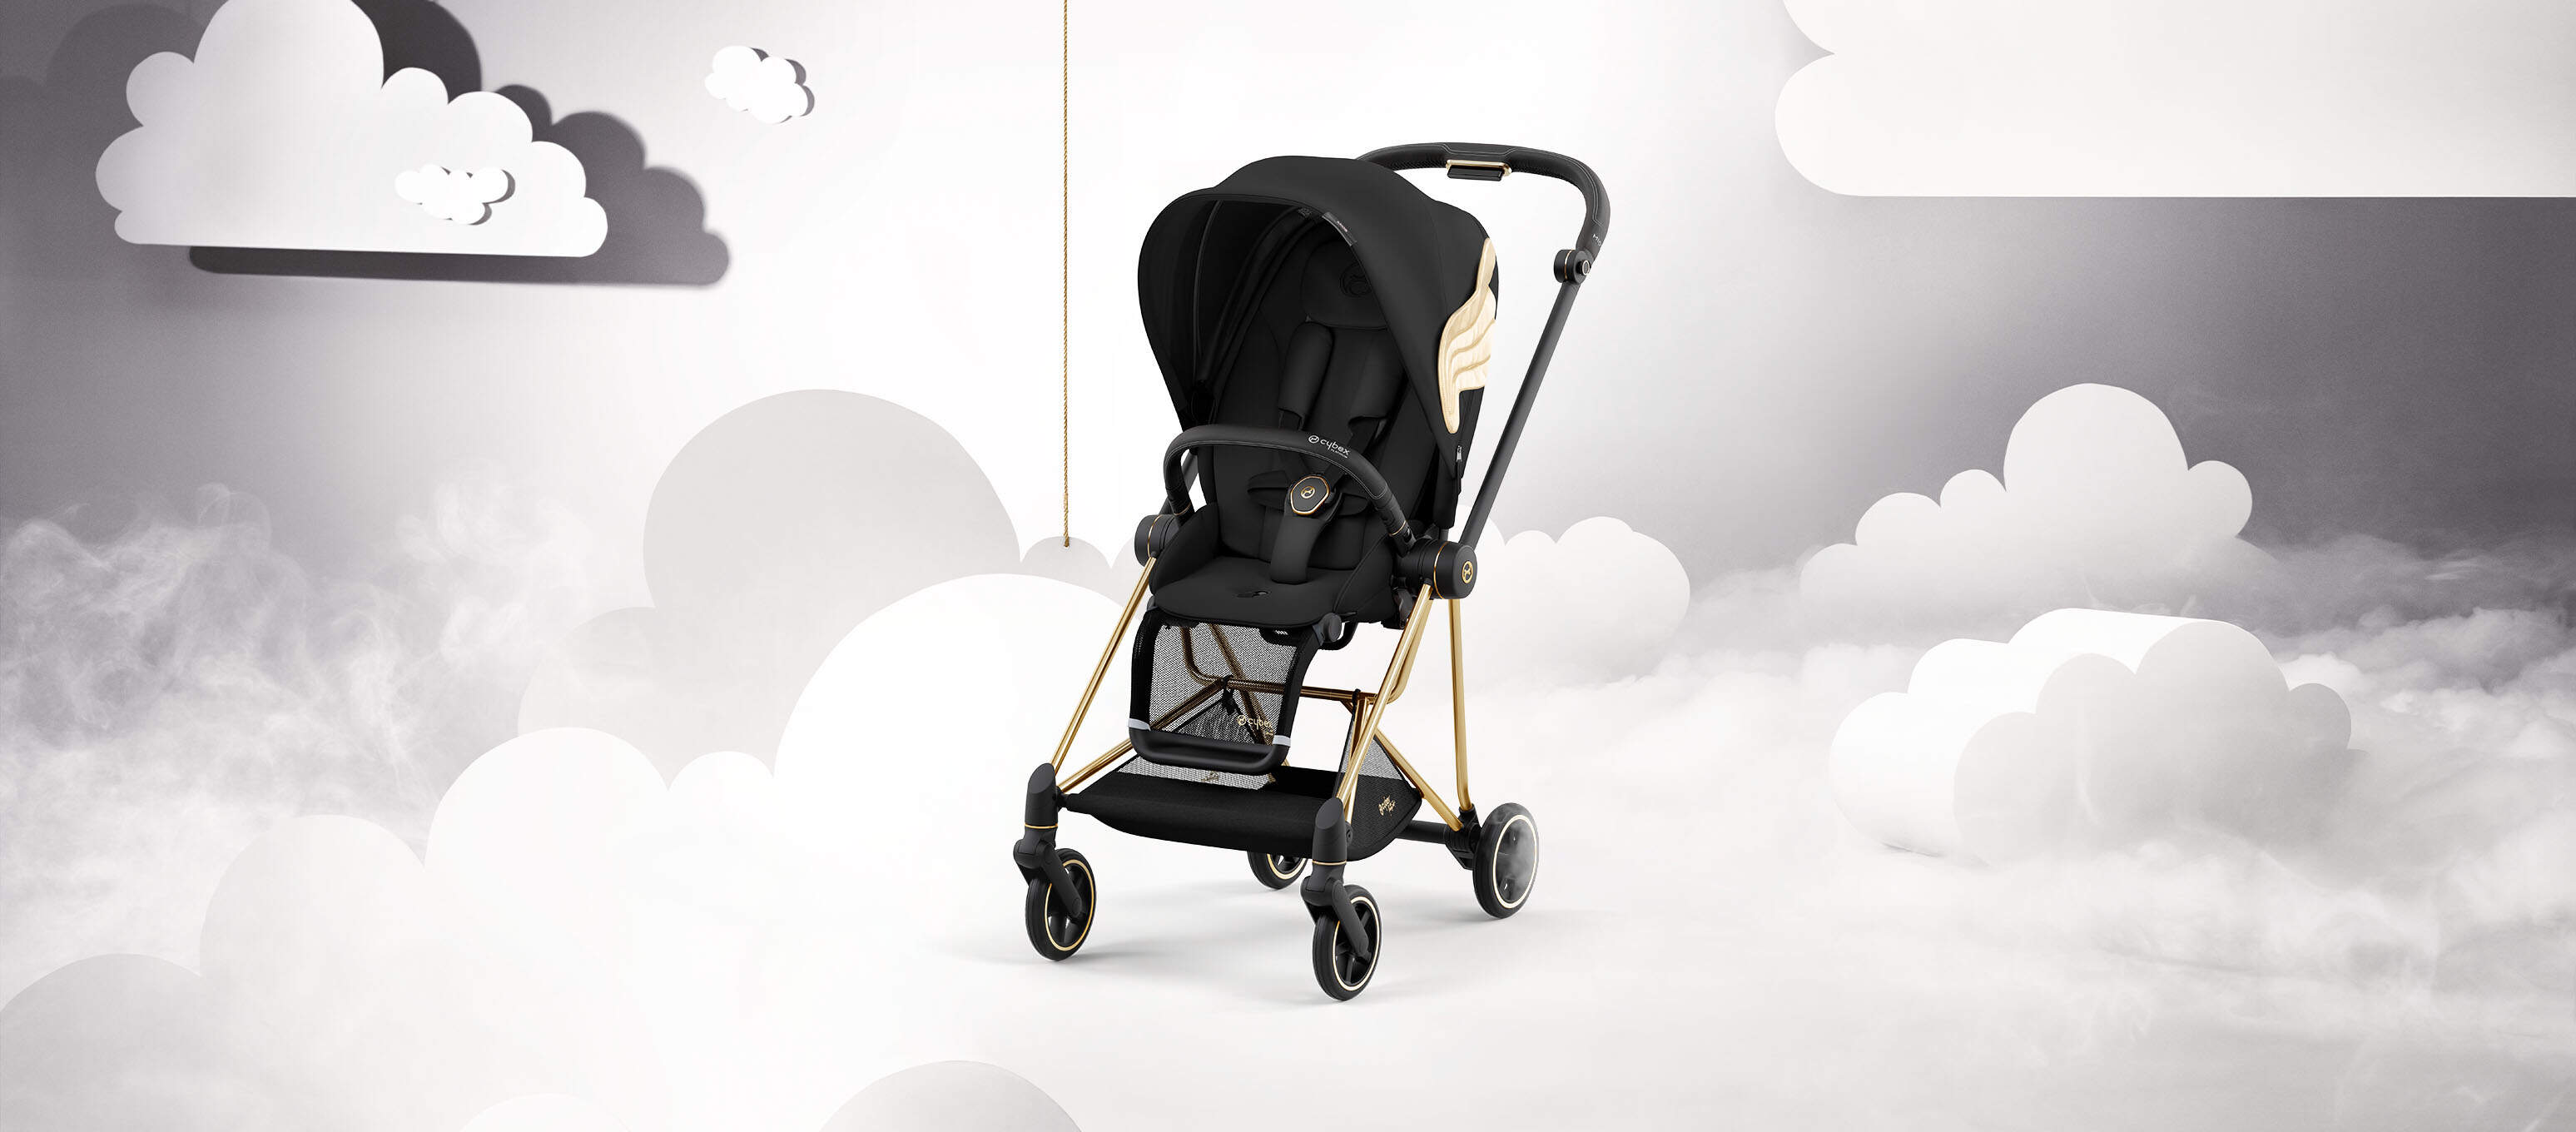 Bild på barnvagn och baby med Cybex by Jeremy Scott Wings-kollektionen